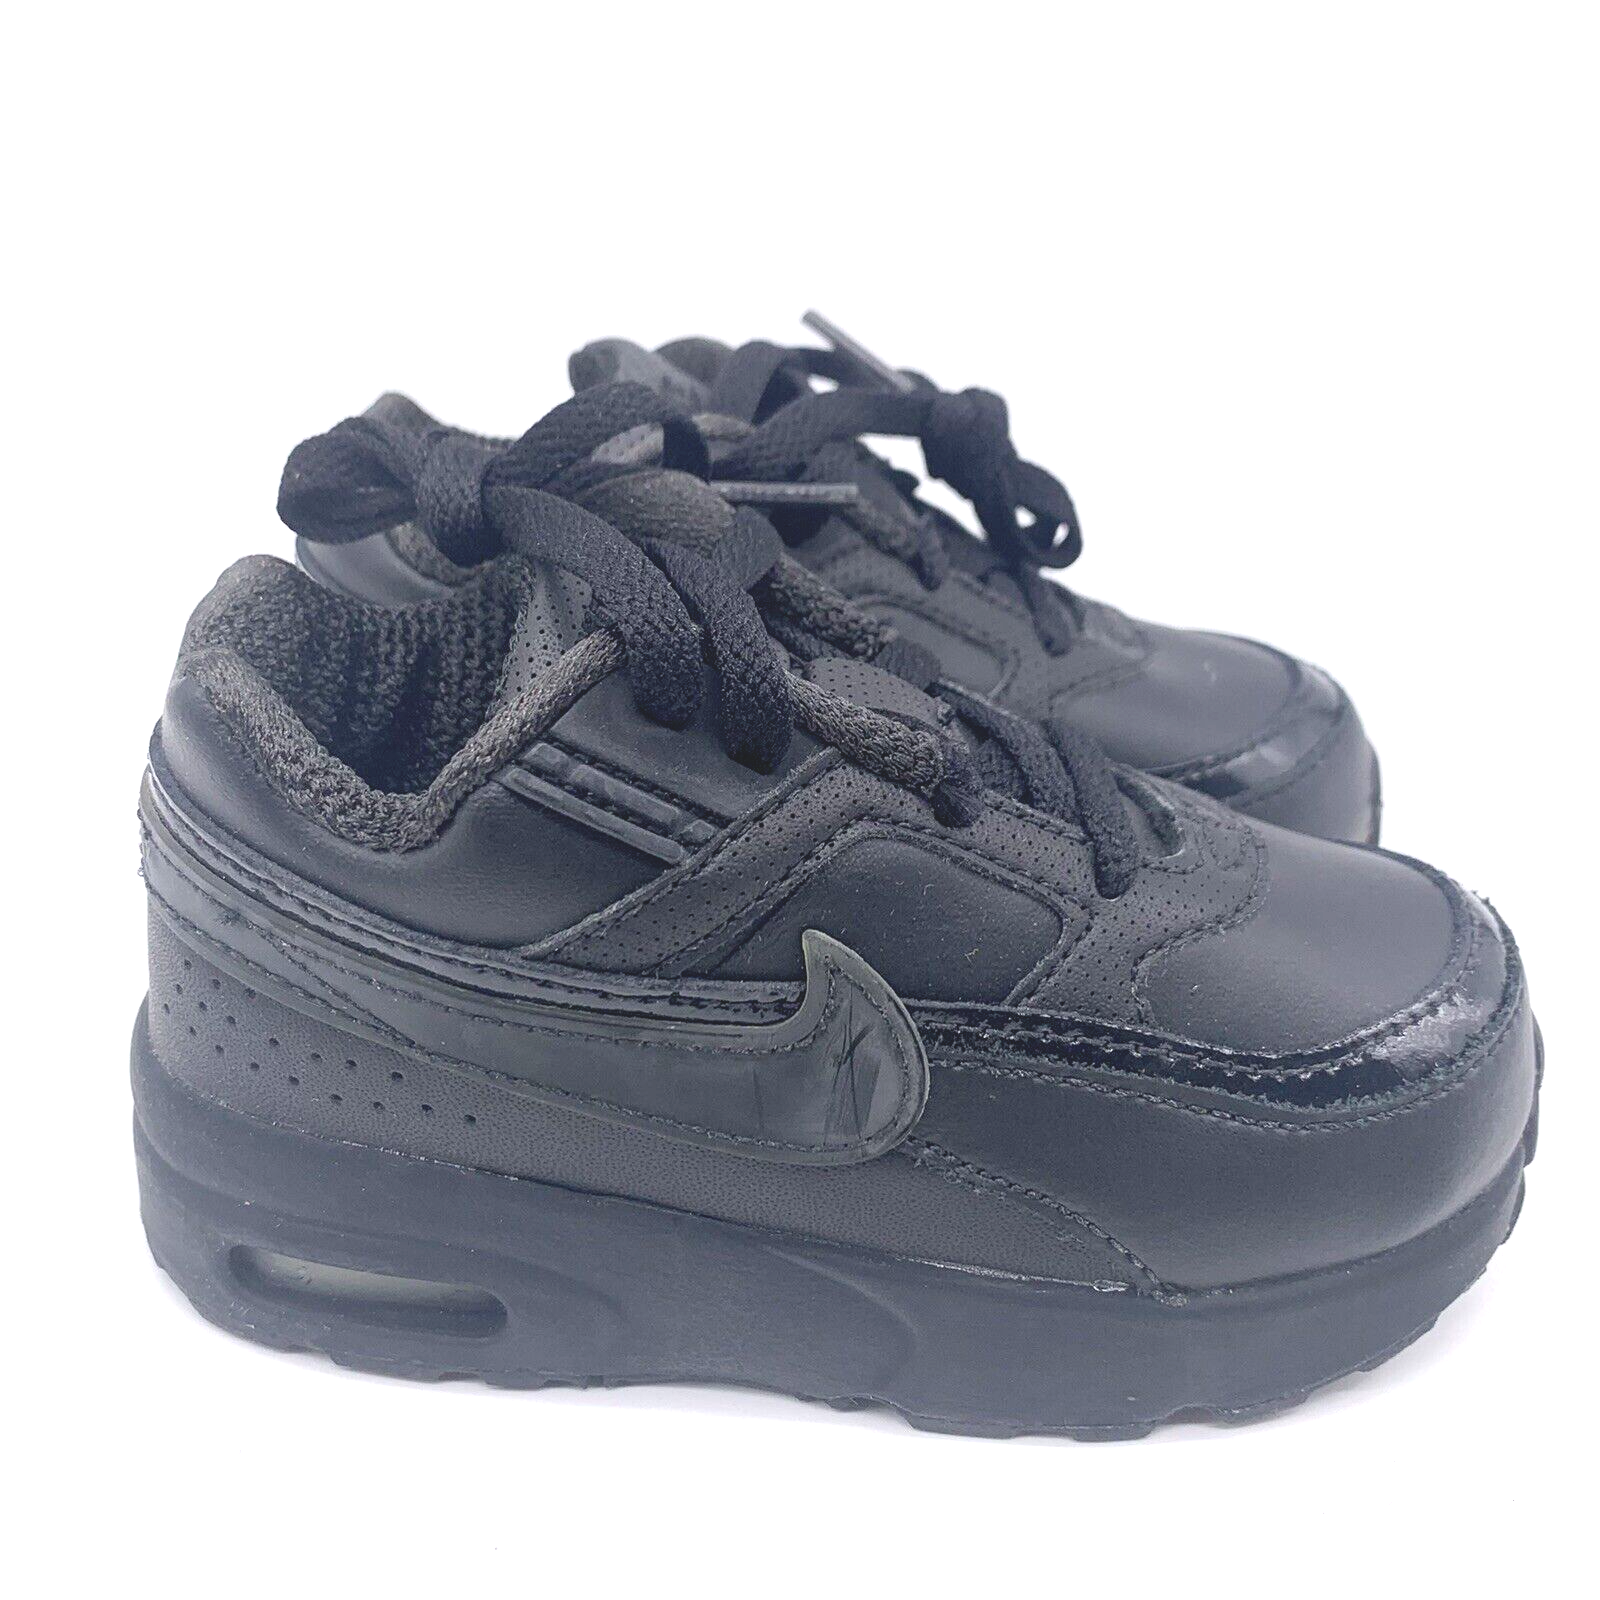 snorkel Tijdreeksen winter Nike Air Classic BW (TD) Baby Air Max Shoes Black 313914 109 Size 4.5c-6.5c  | eBay